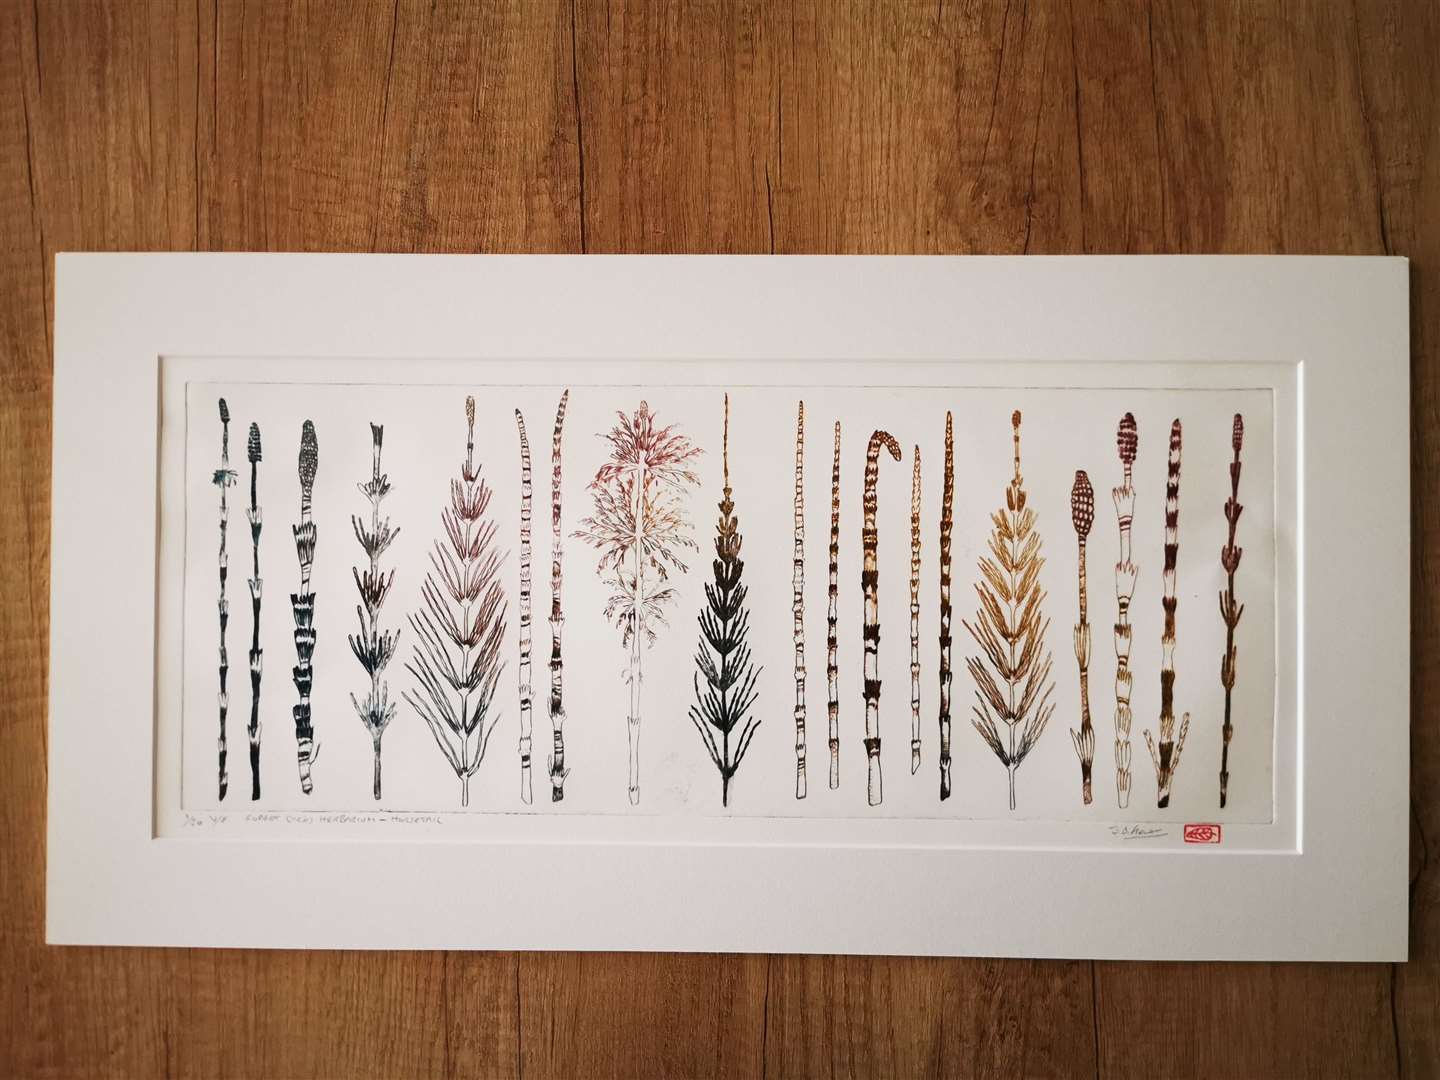 This piece by Joanne B Kaar was inspired by Robert Dick's herbarium. Picture courtesy of Joanne B Kaar, Brough